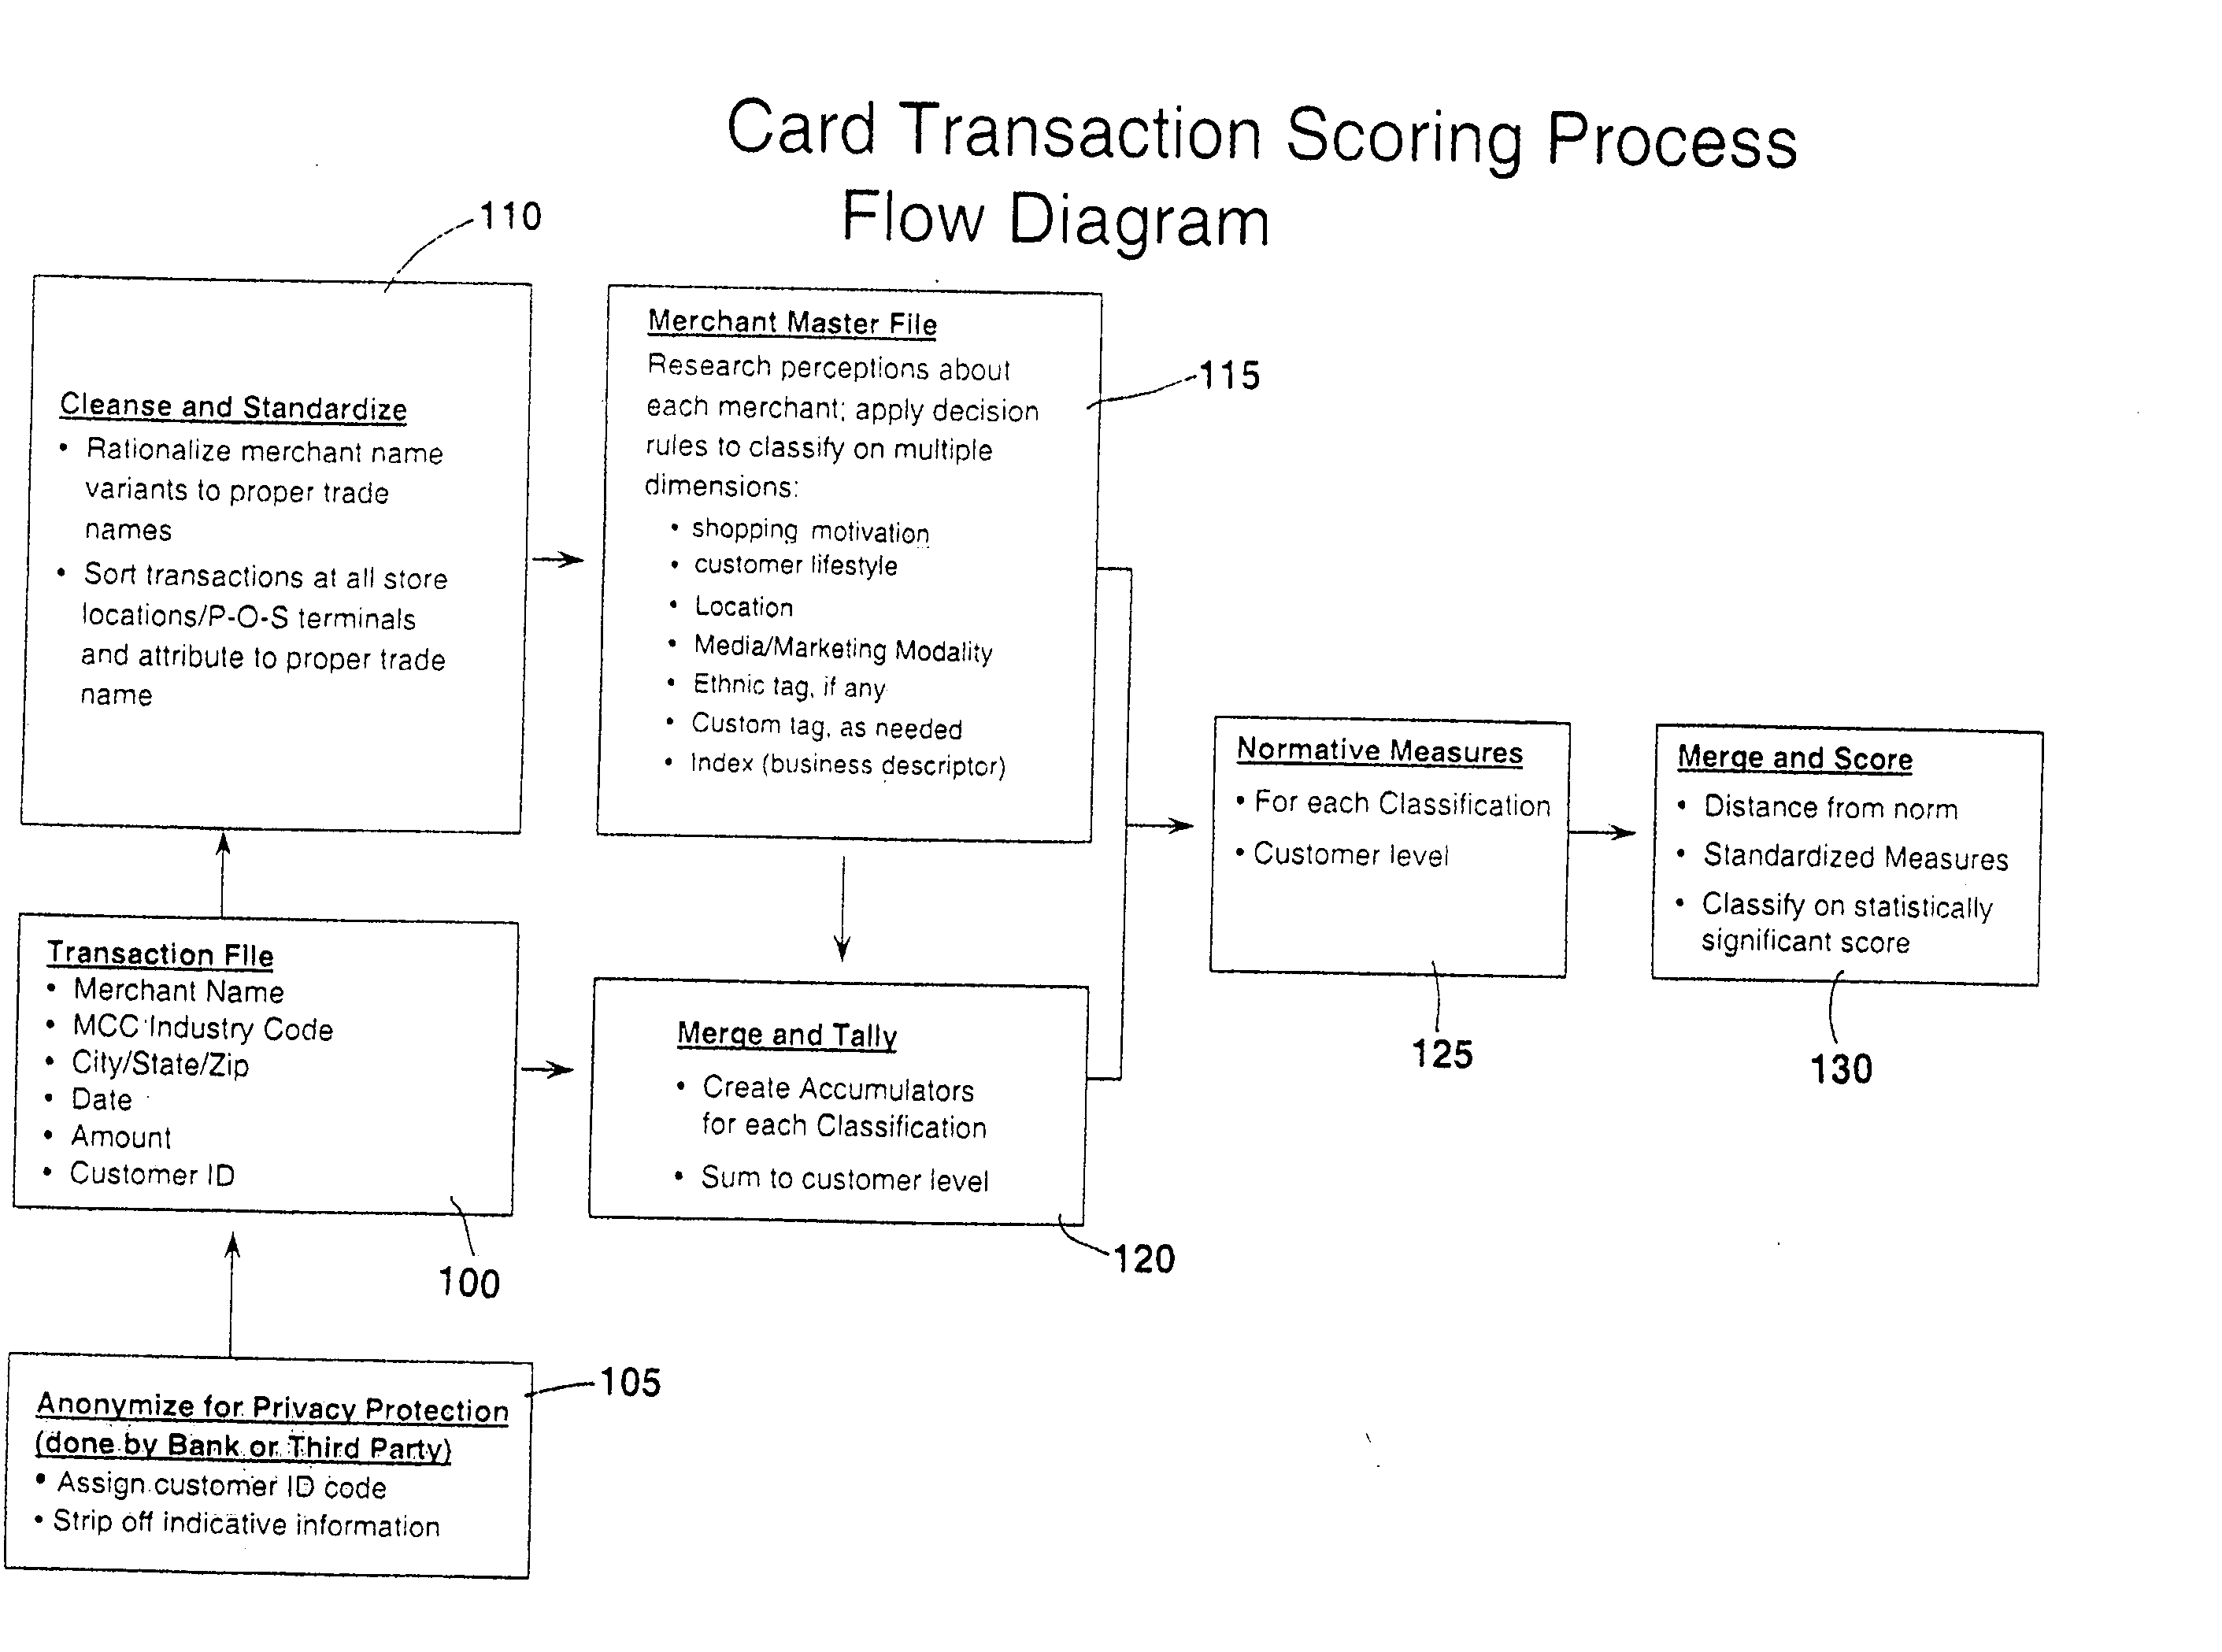 Method of analyzing credit card transaction data